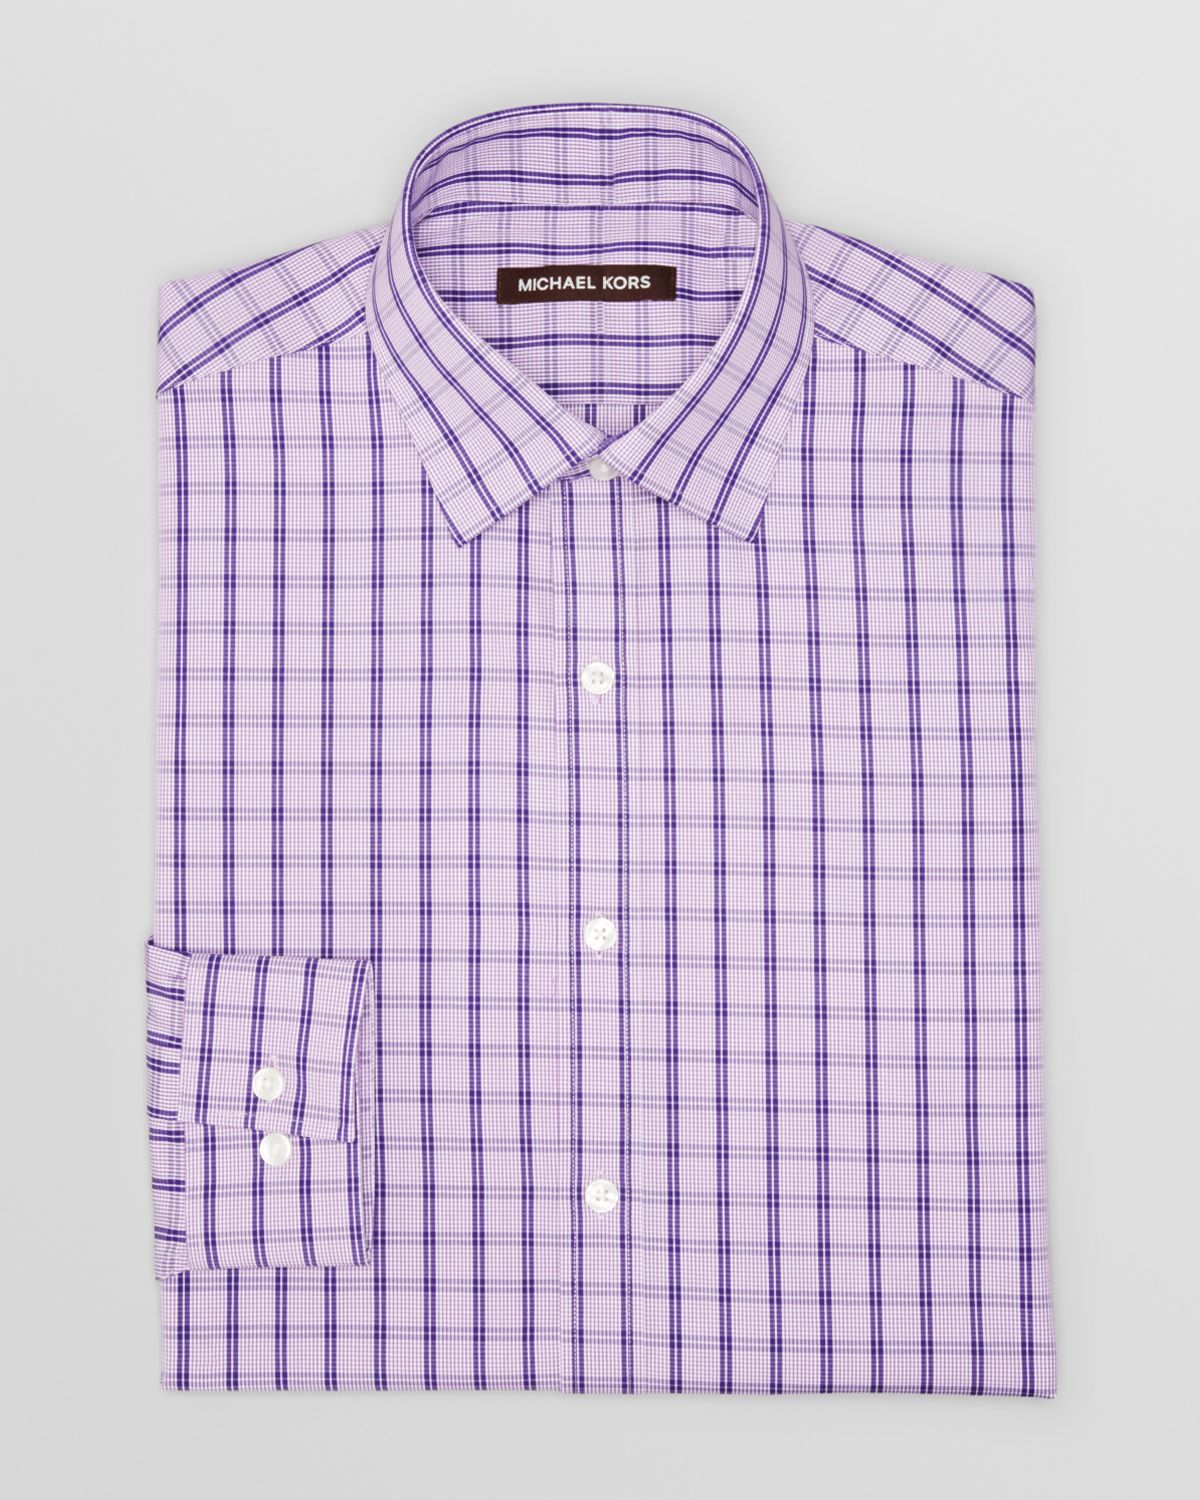 Michael kors Check Dress Shirt Regular Fit in Purple for Men | Lyst